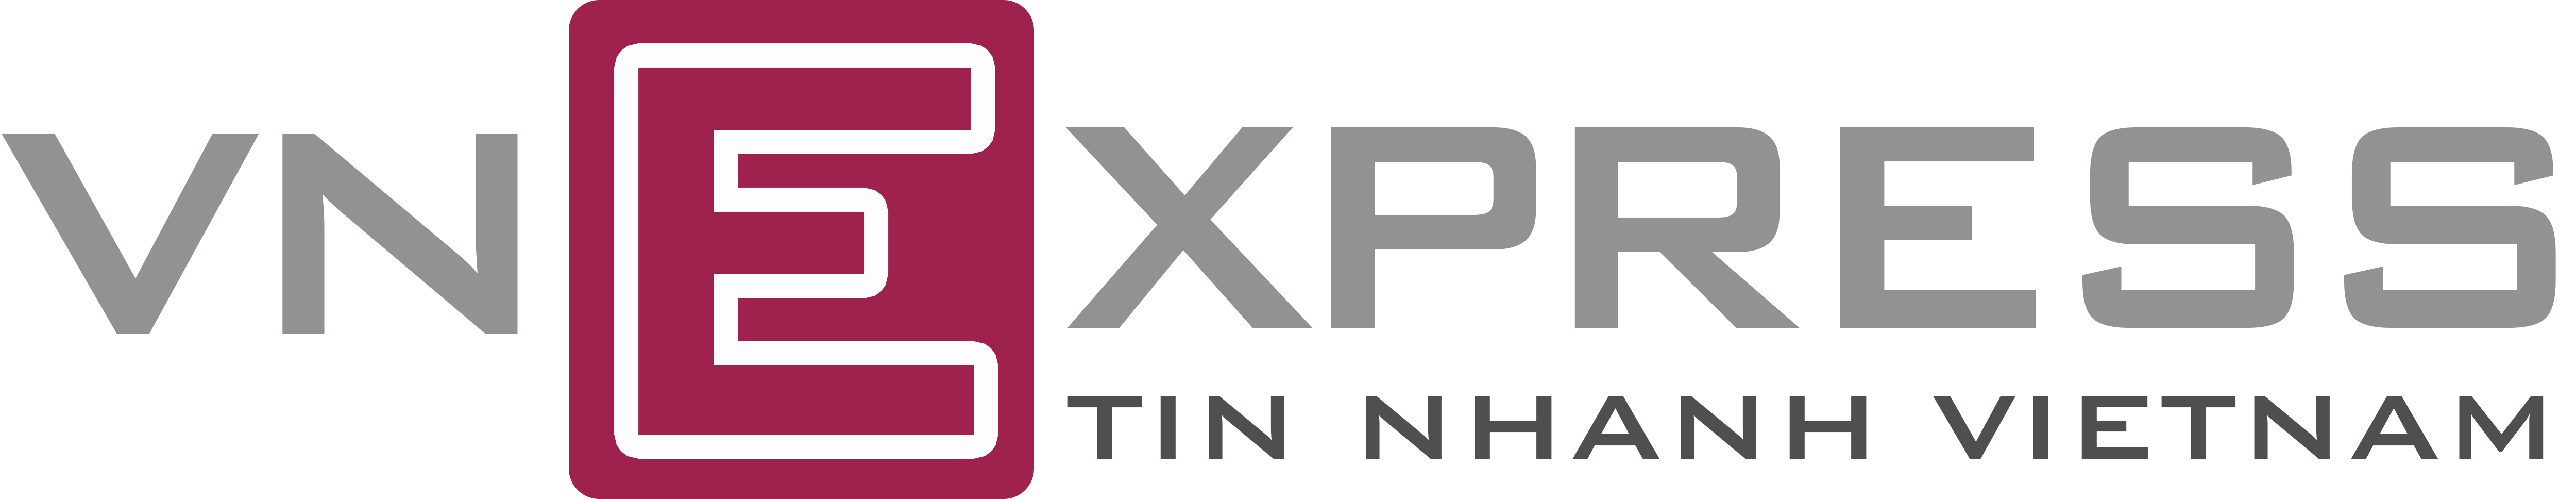 Báo VnExpress_logo